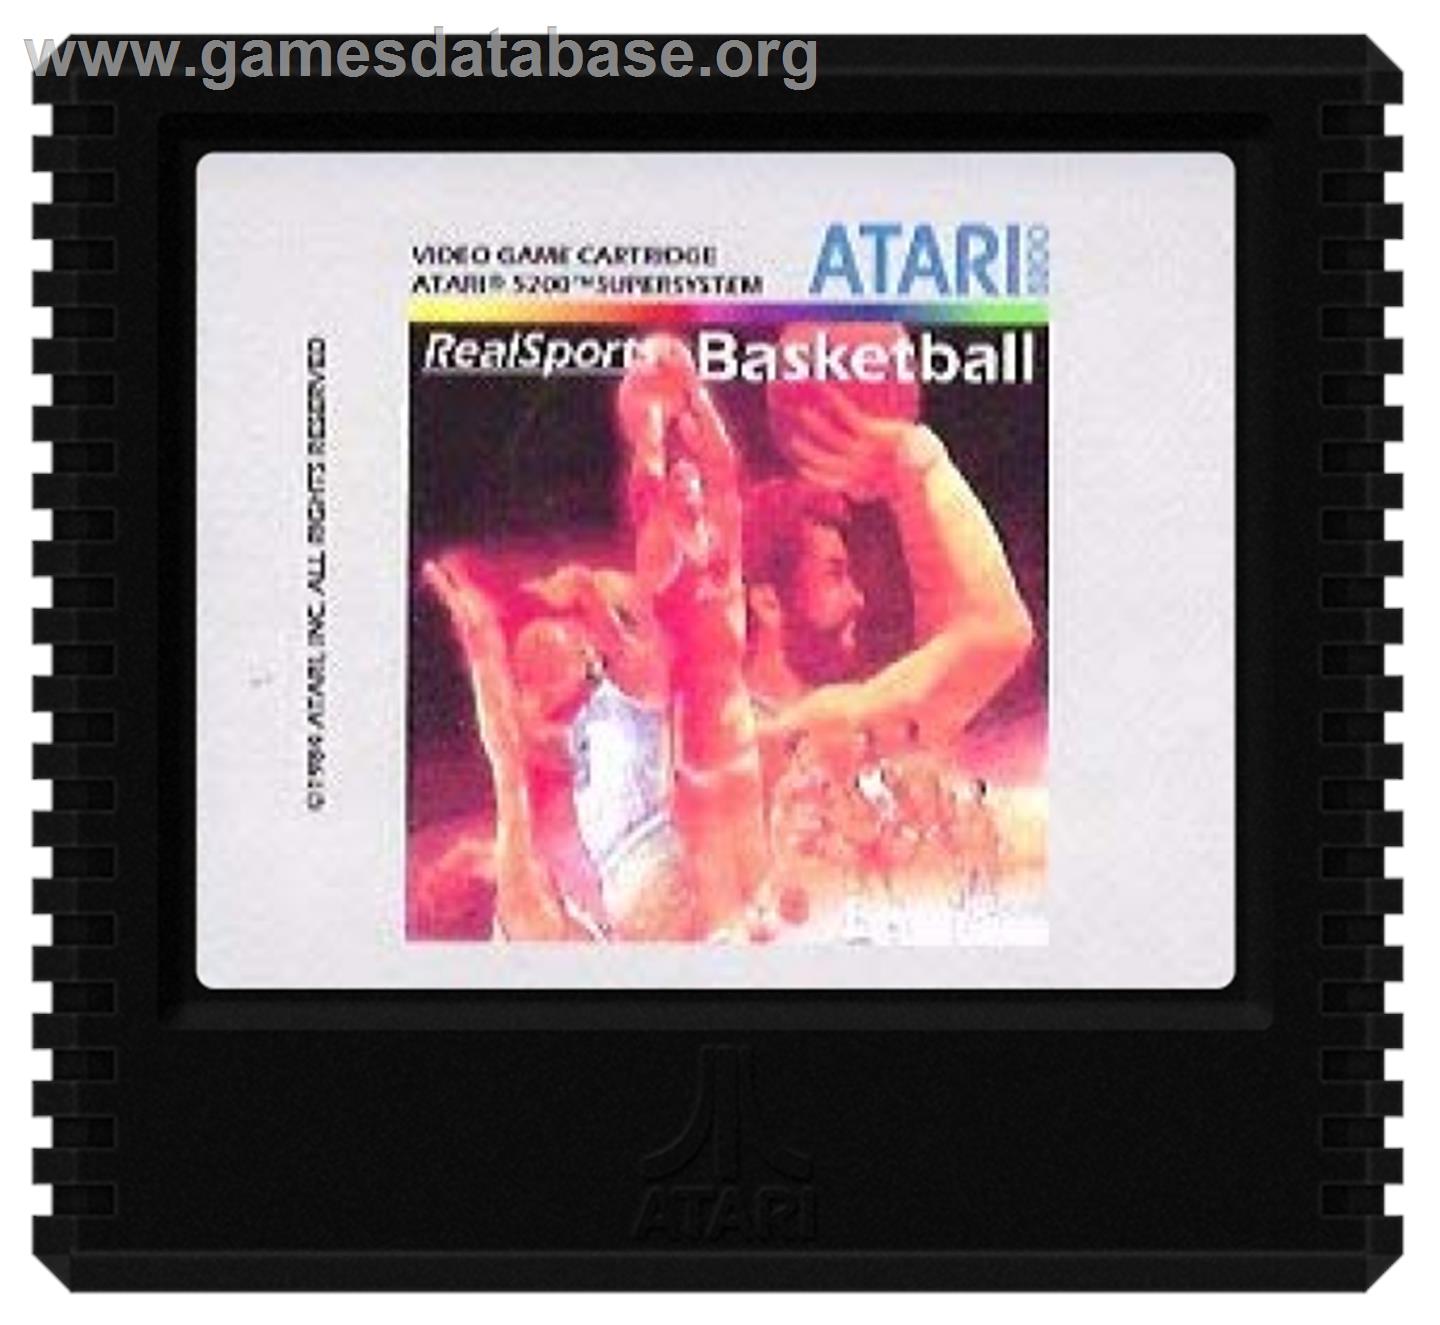 RealSports Basketball - Atari 5200 - Artwork - Cartridge